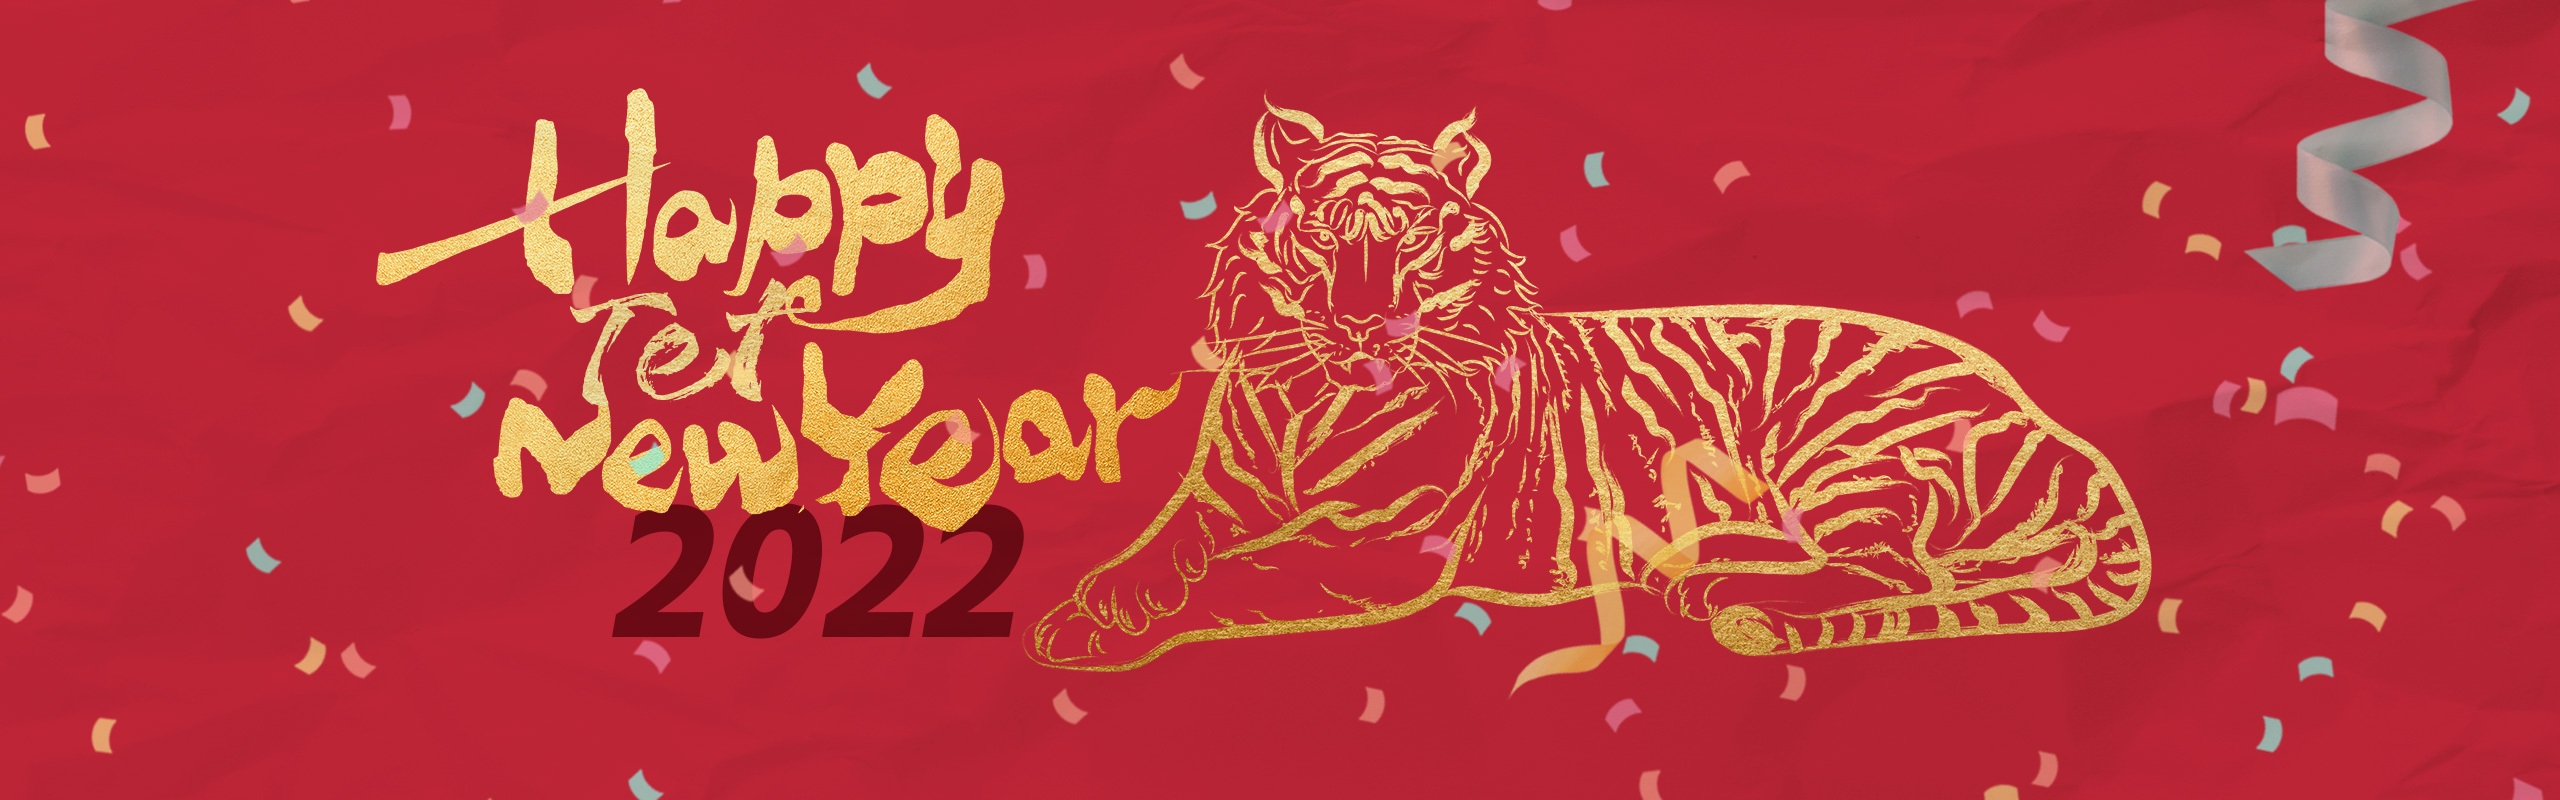 Tet Vietnam 2022: Date Feb. 1, Year of the Tiger